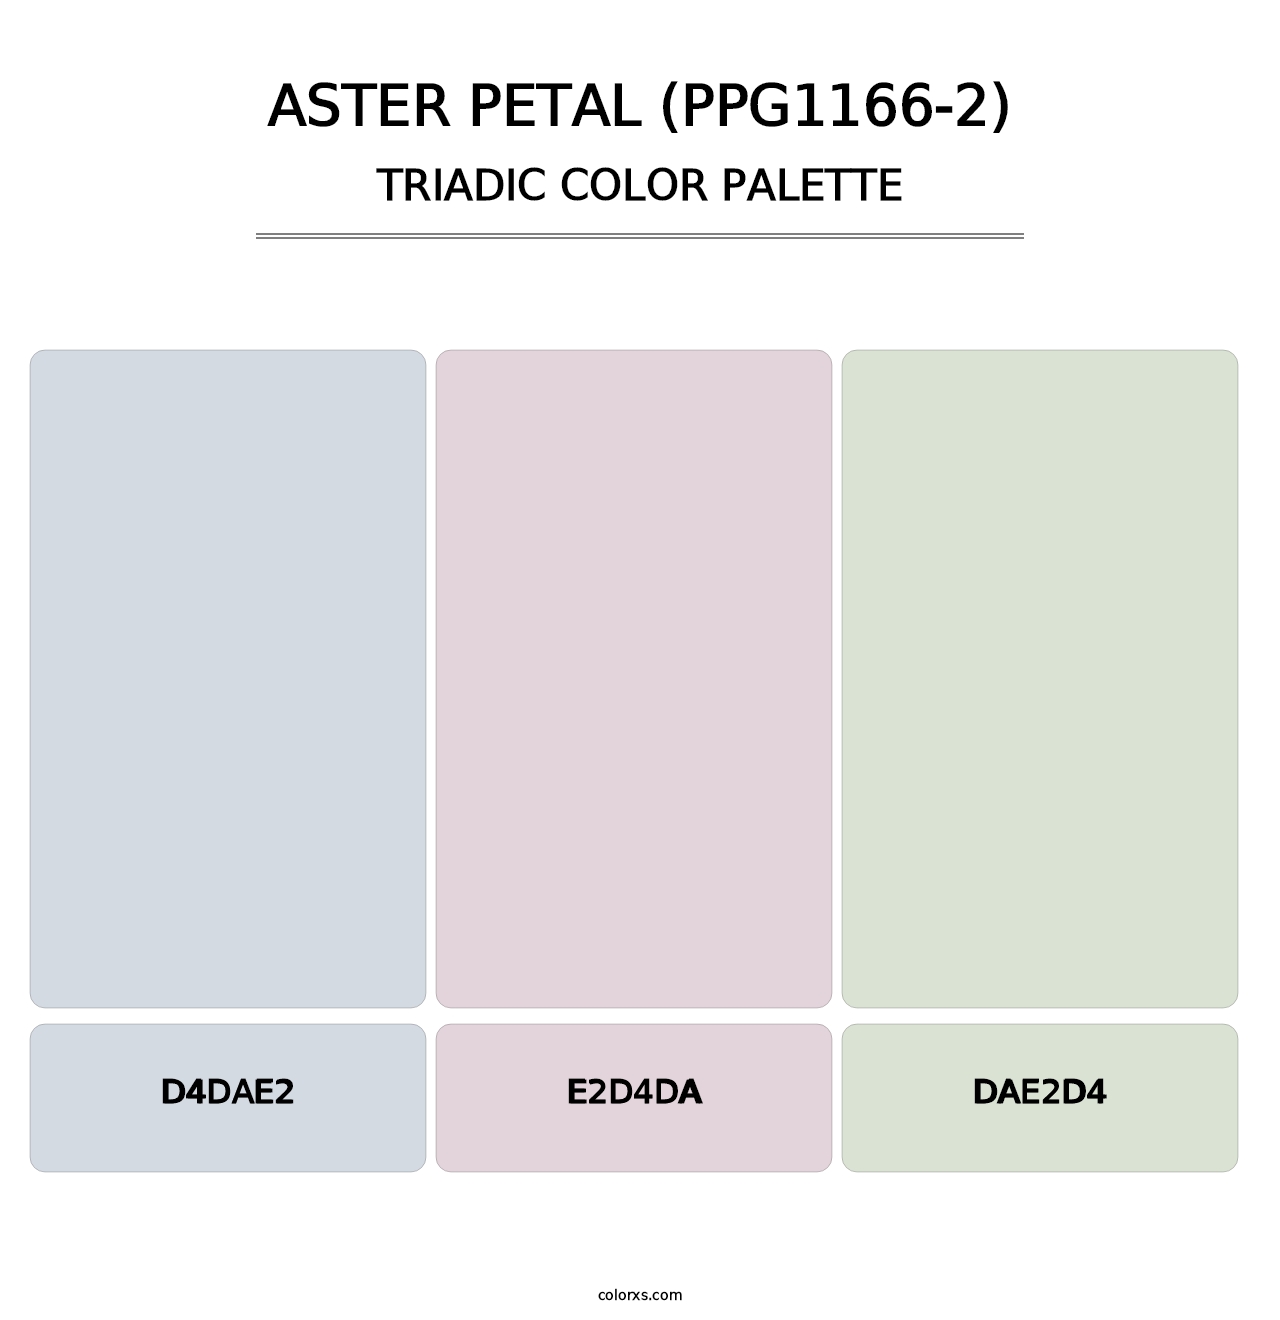 Aster Petal (PPG1166-2) - Triadic Color Palette